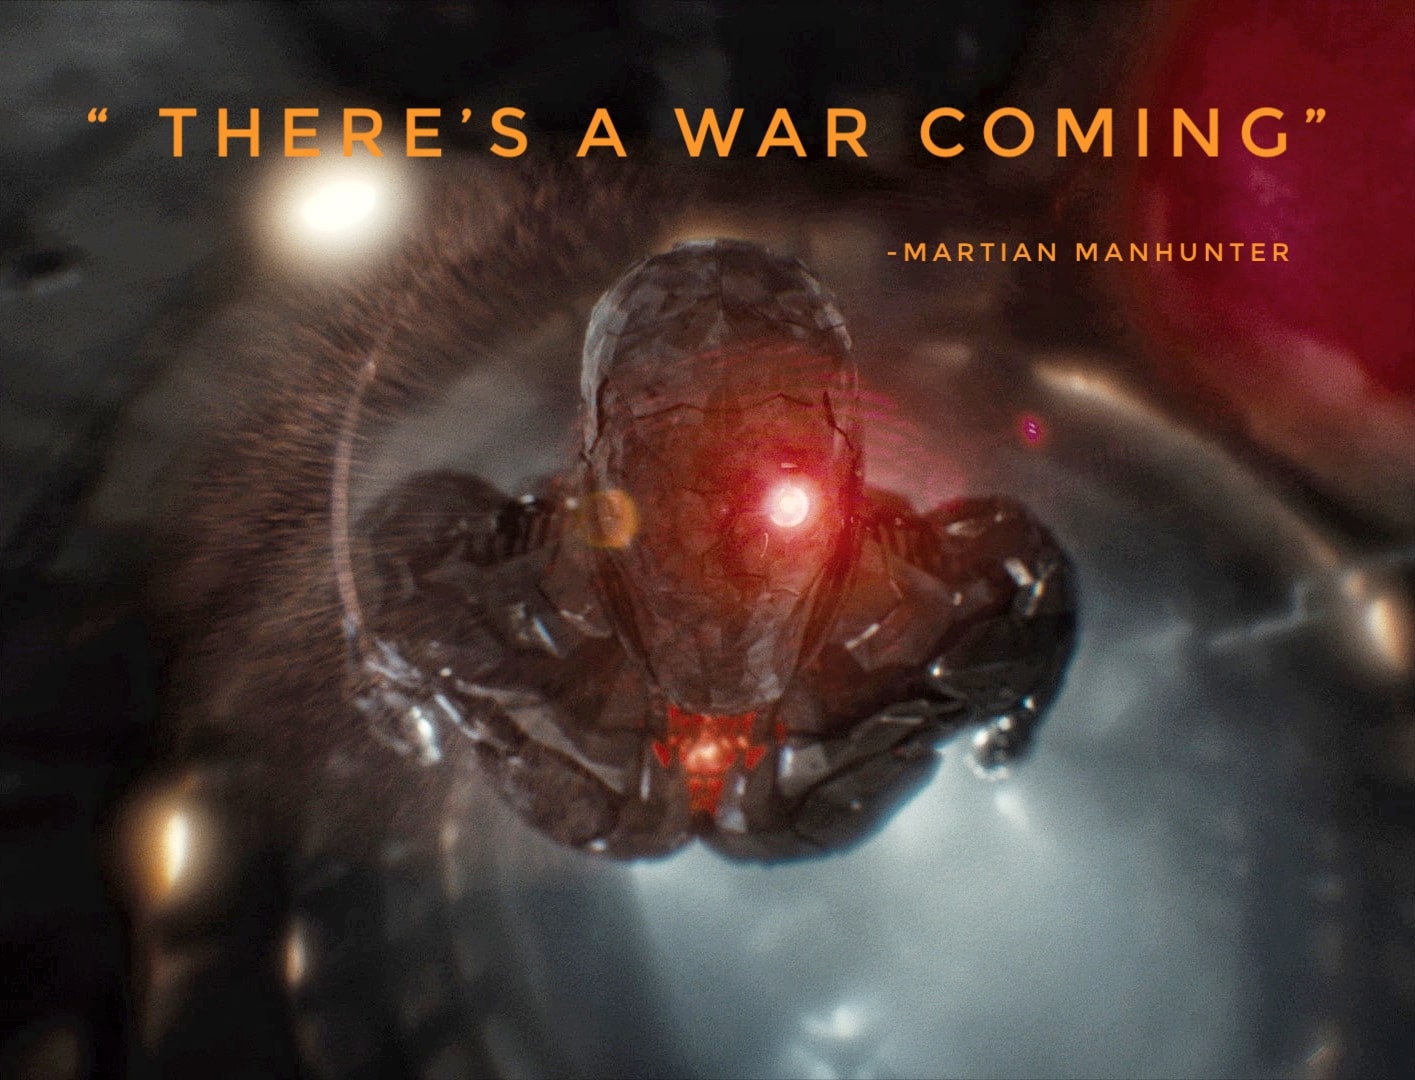 Martian Manjunter in in Zack Snyder's Justice League